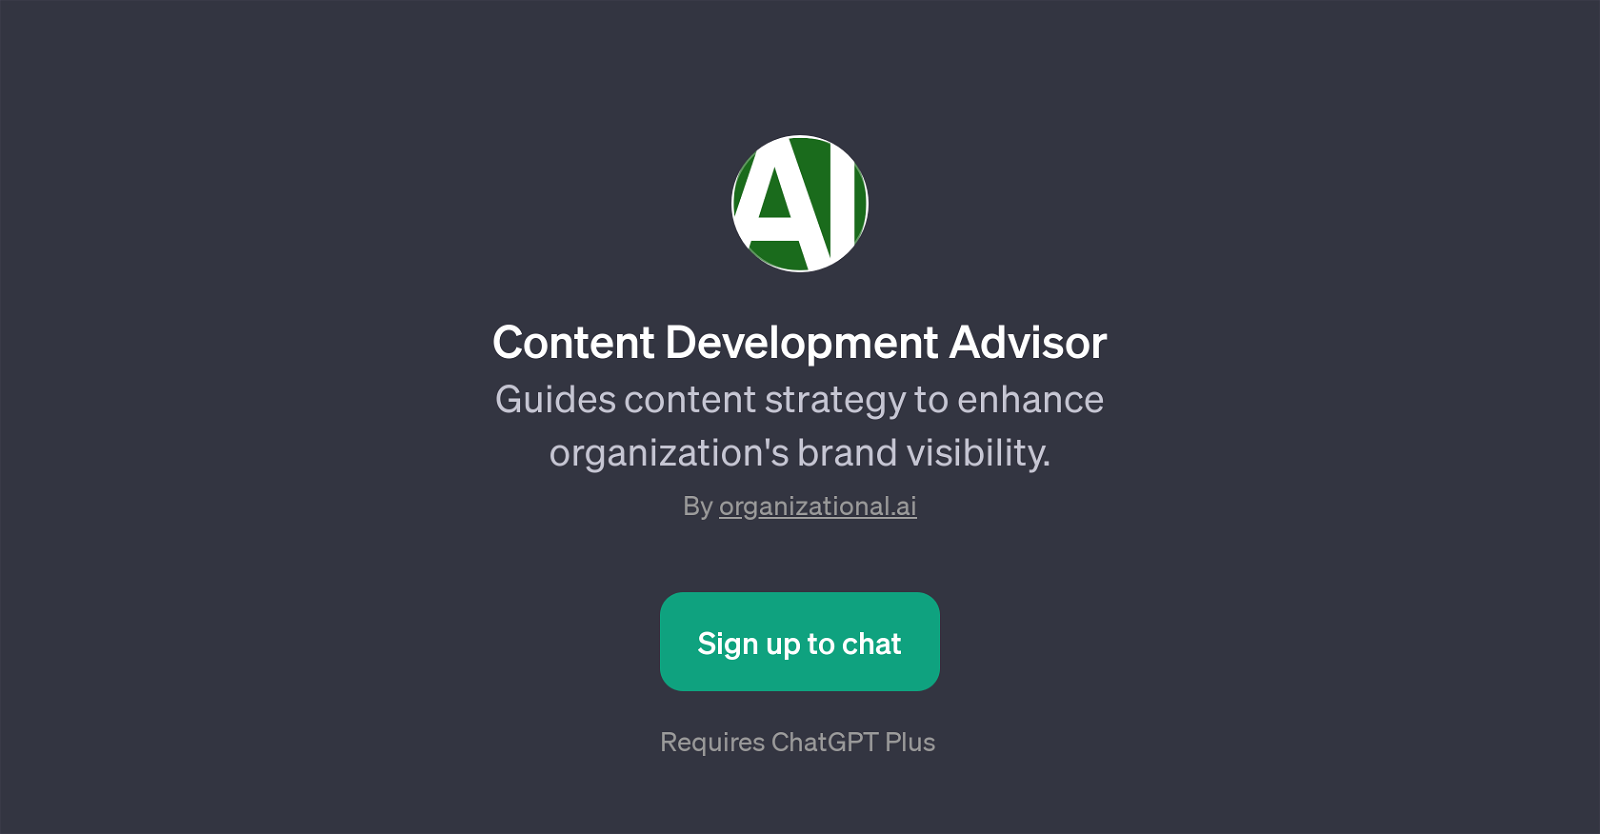 Content Development Advisor website